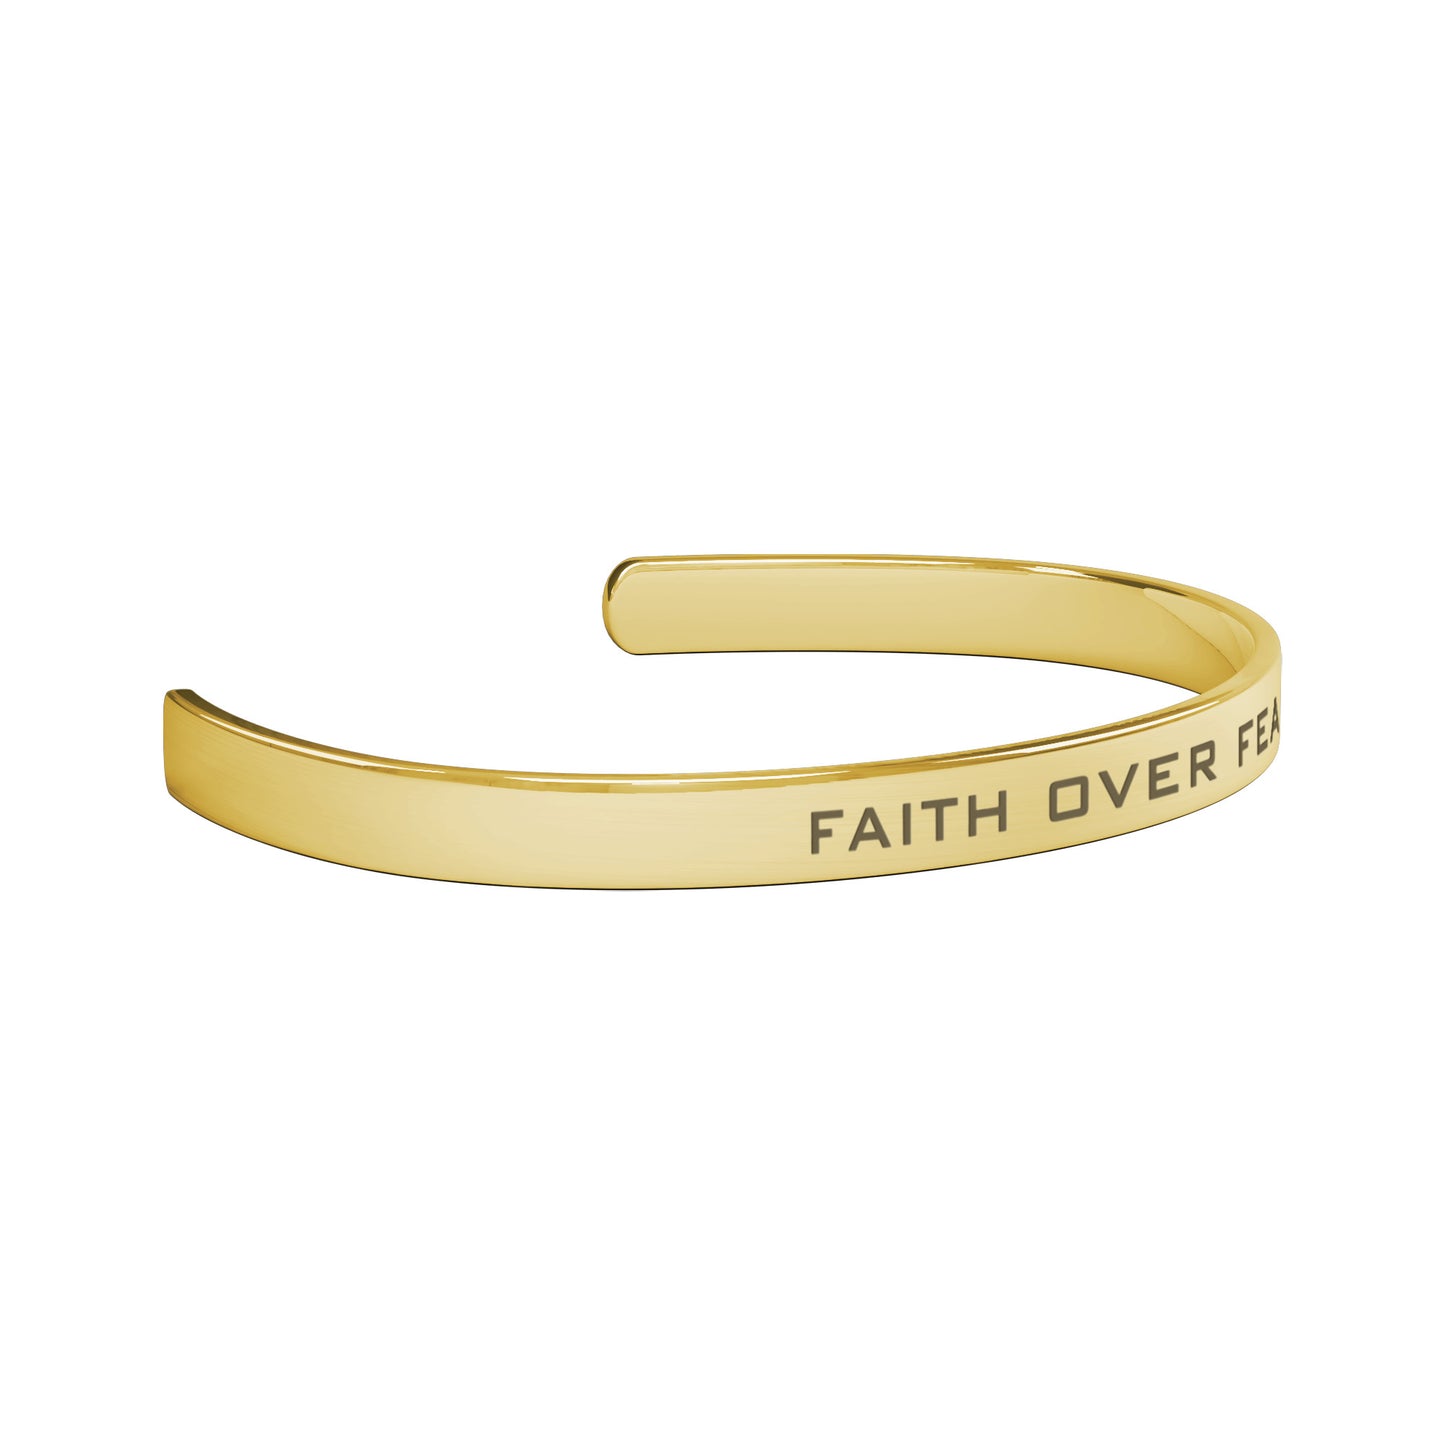 Personalizable Faith Over Fear Cuff Bracelet